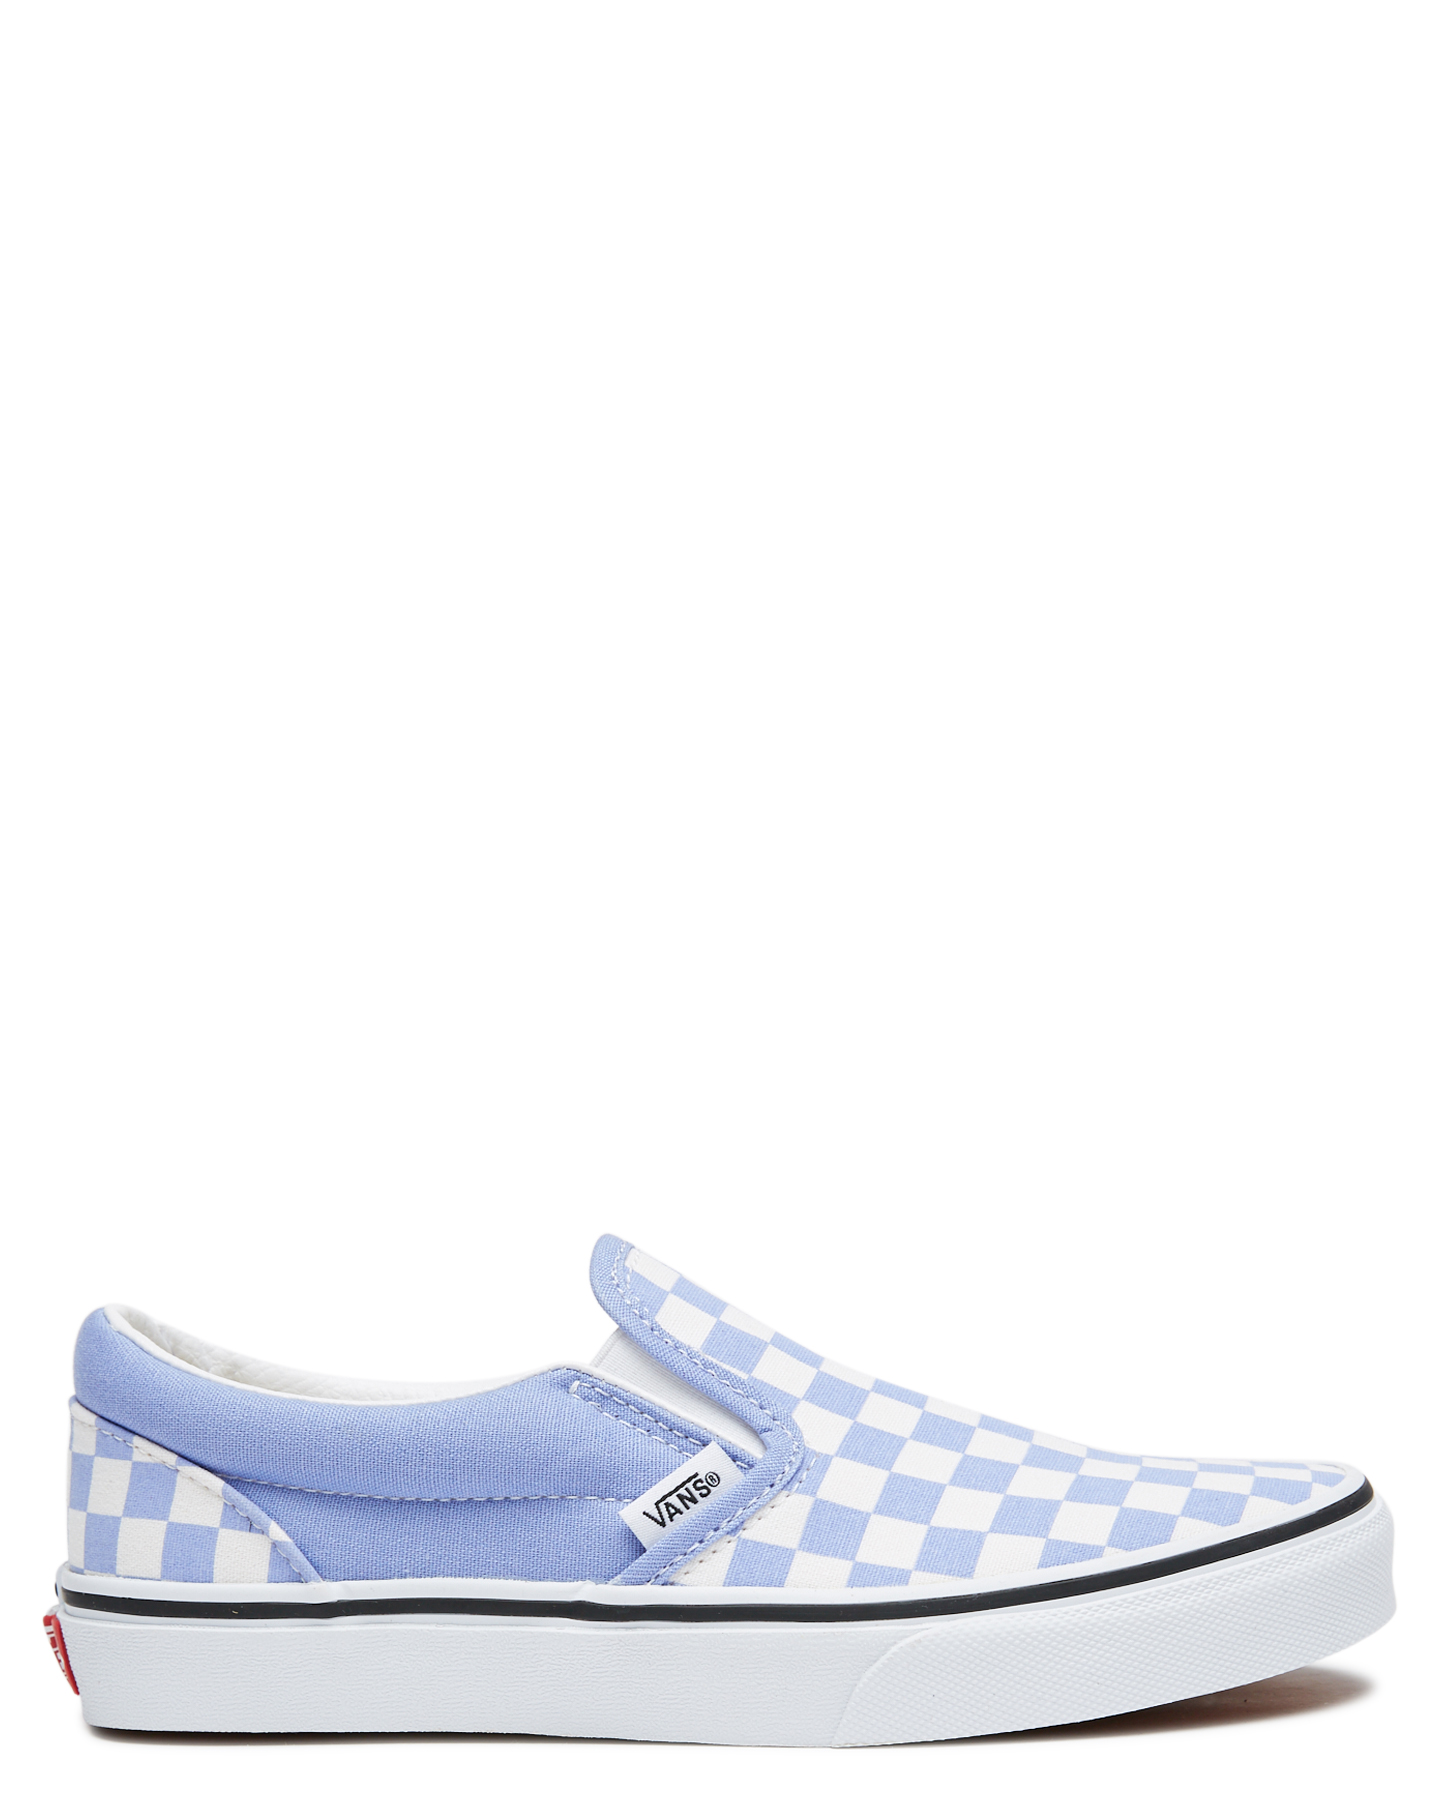 blue vans sneakers for girls